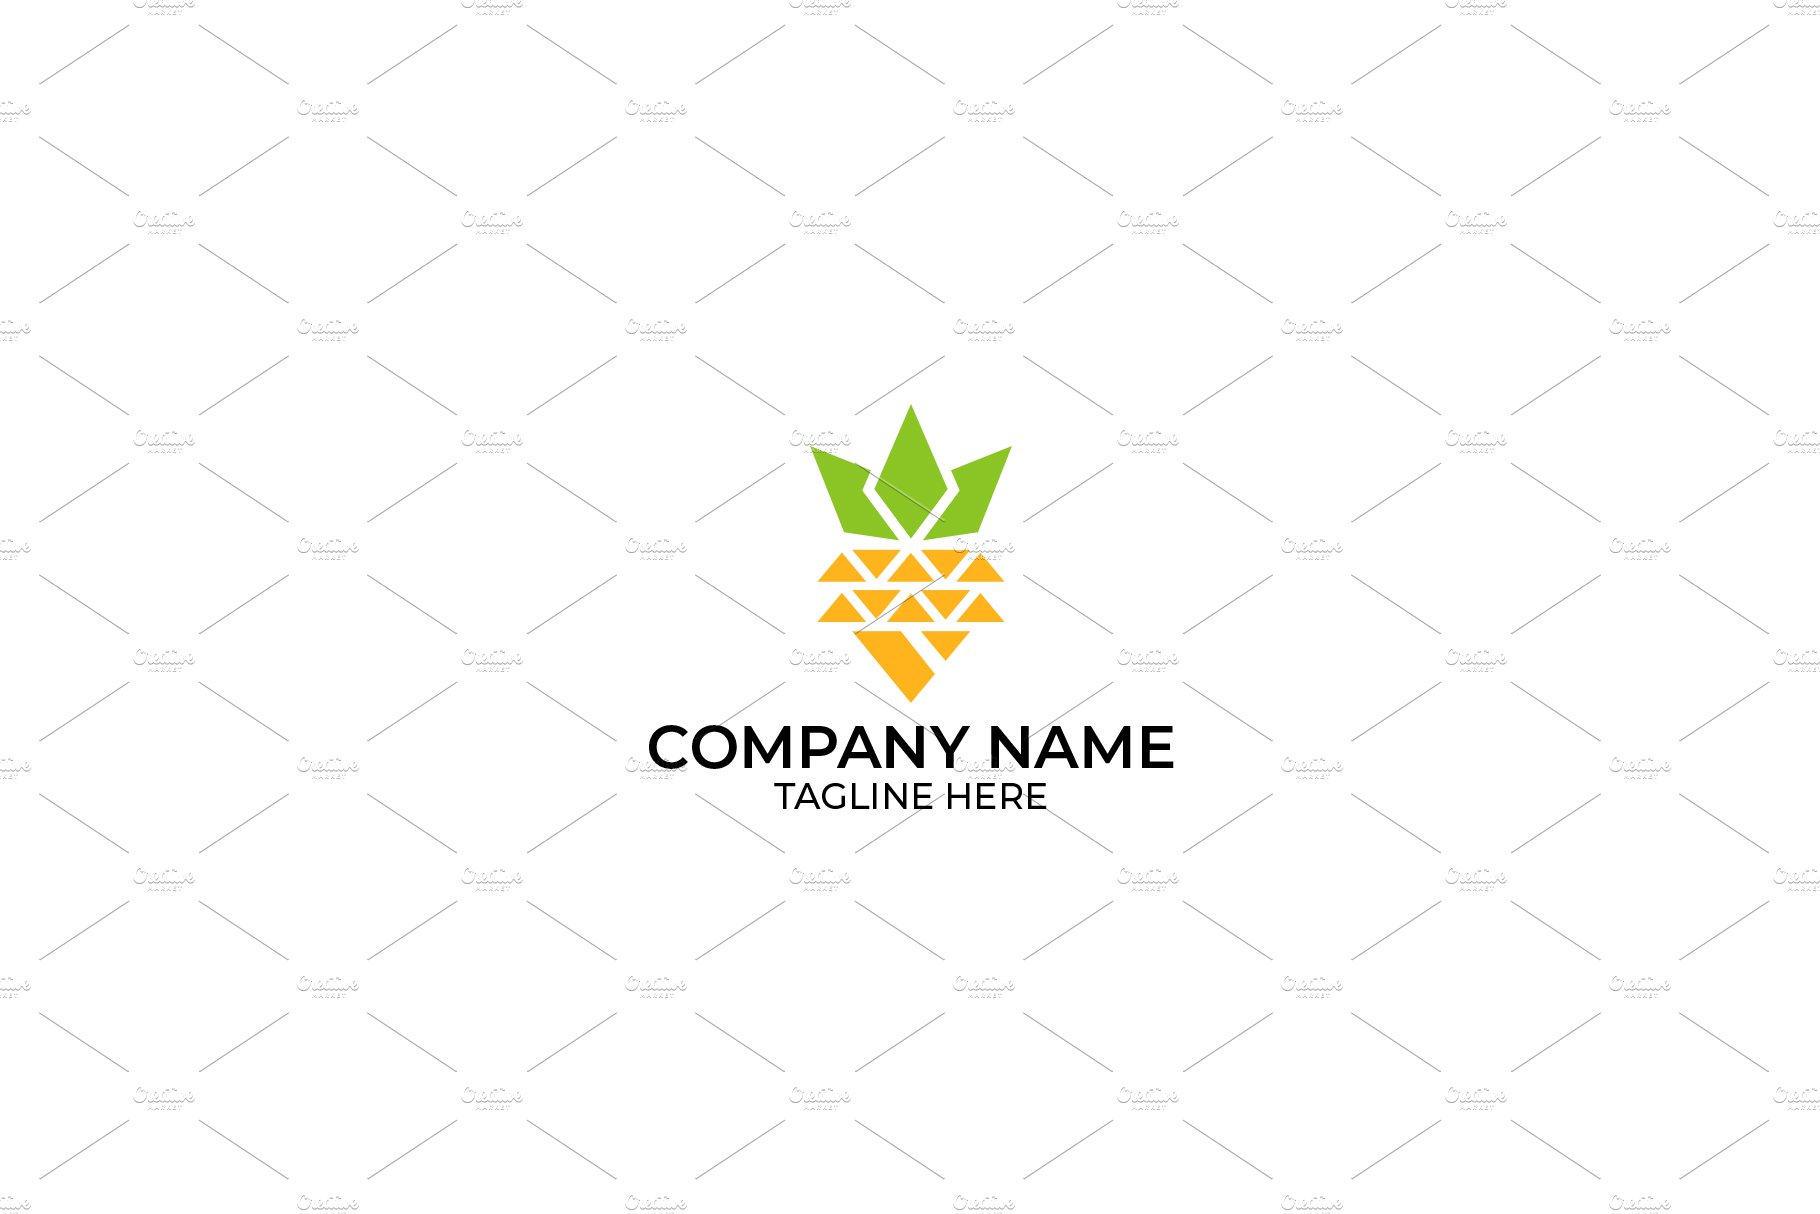 Pineapple Logo Design cover image.